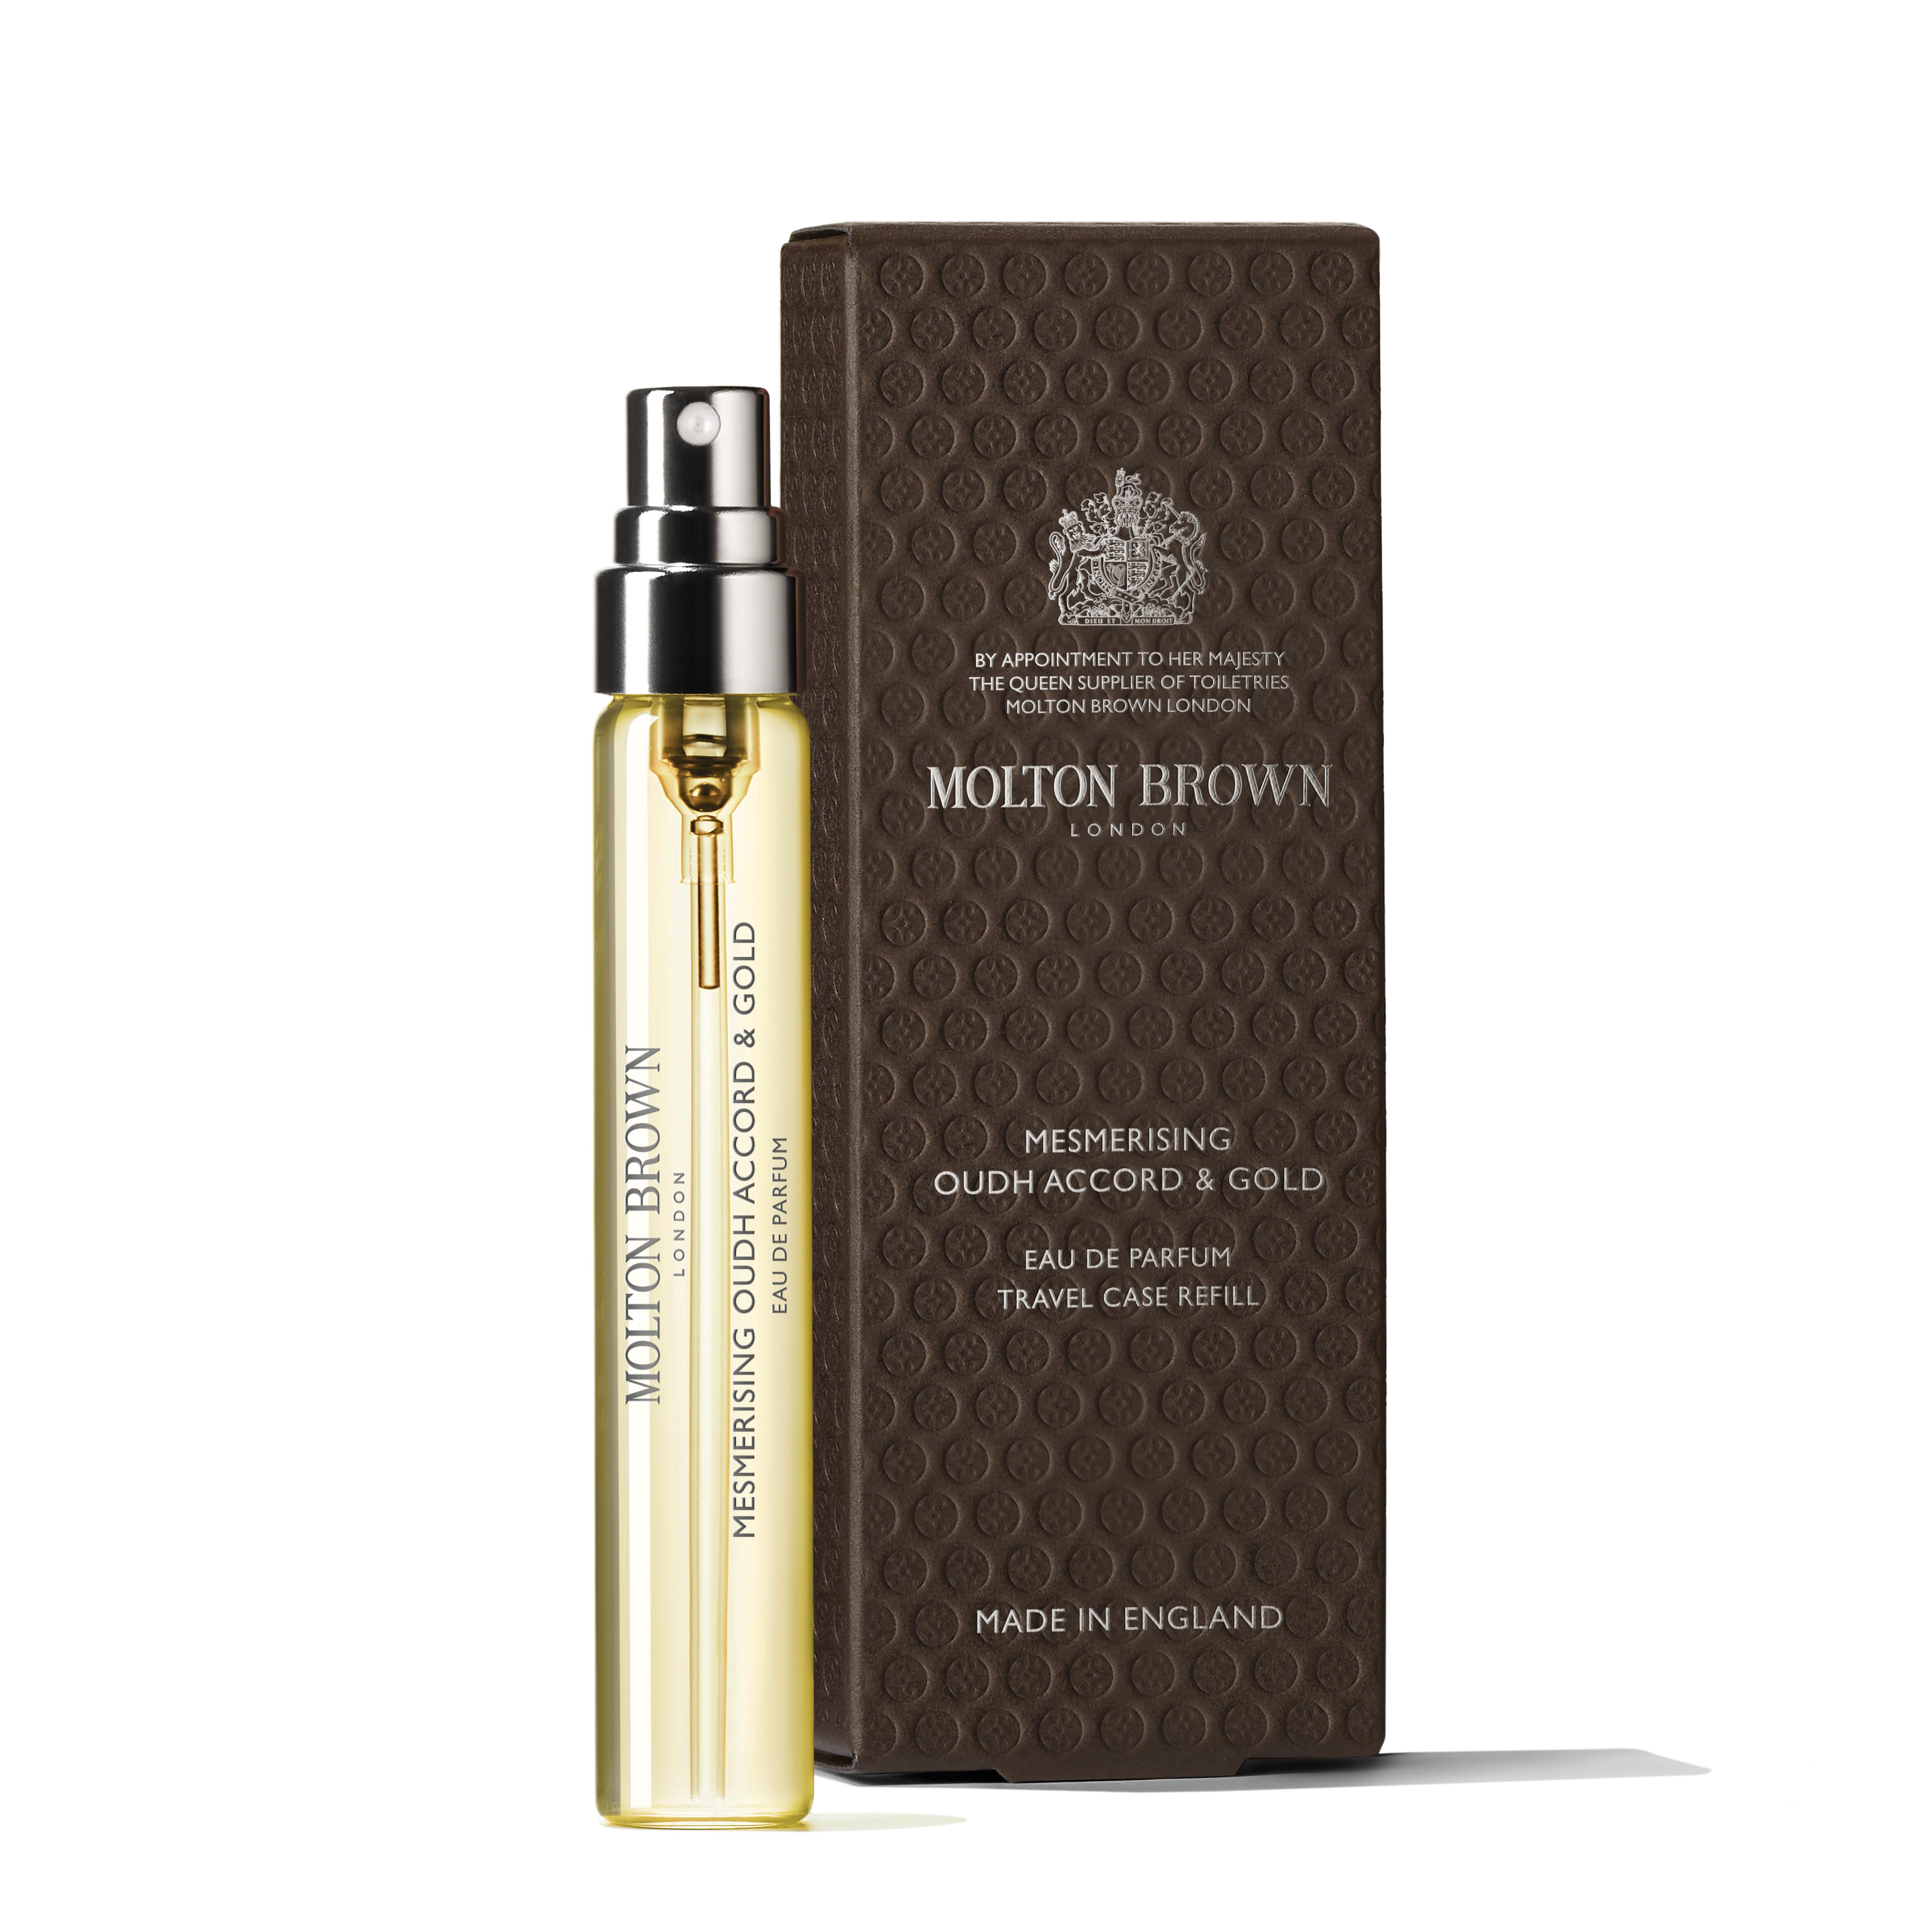 Molton Brown Mesmerising Oudh Accord & Gold Eau De Parfum 7.5ml Case Refill x 2